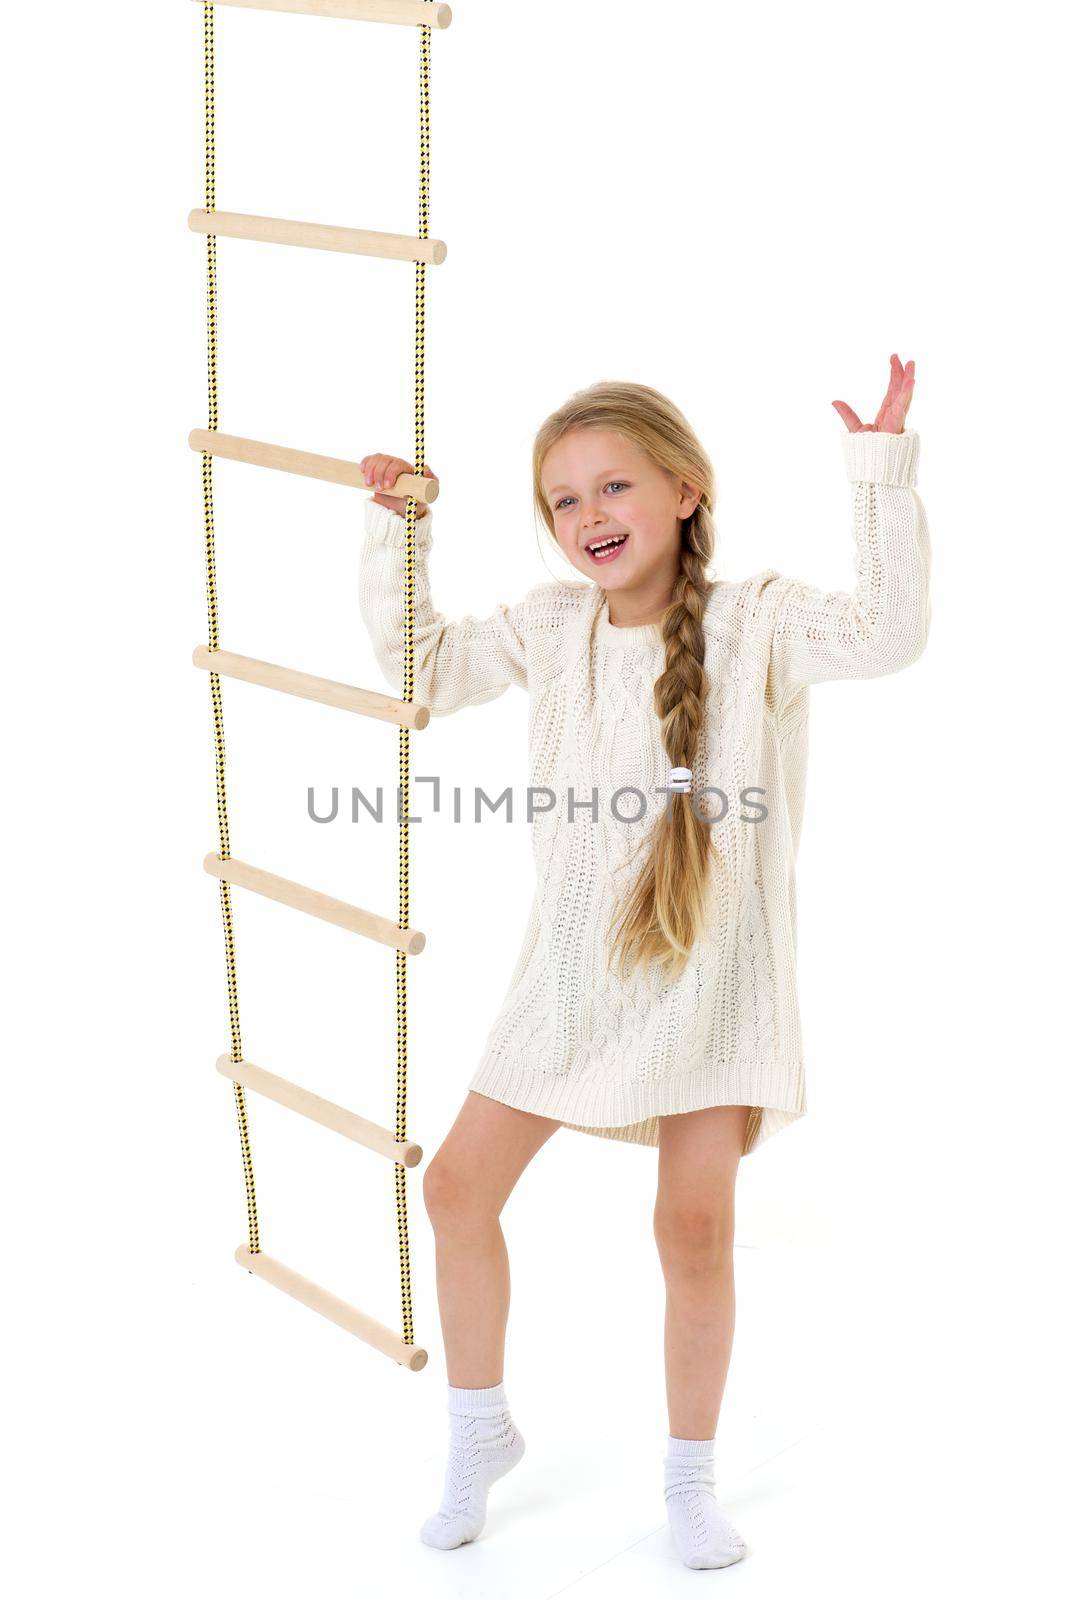 Little girl plays on a rope ladder. by kolesnikov_studio